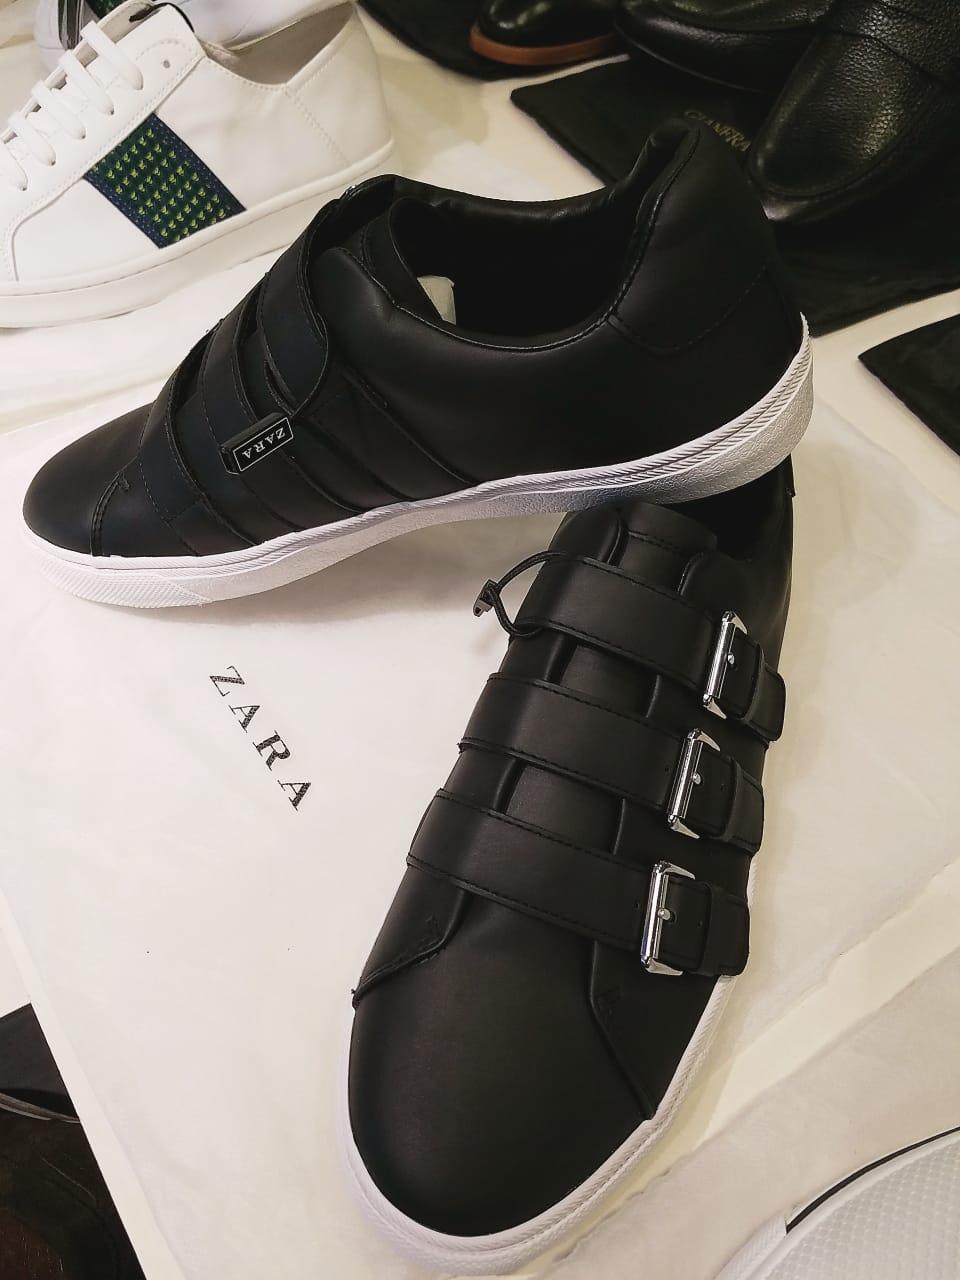 Zara Formal Shoes | Dress shoes men, Formal shoes, Mens fashion shoes